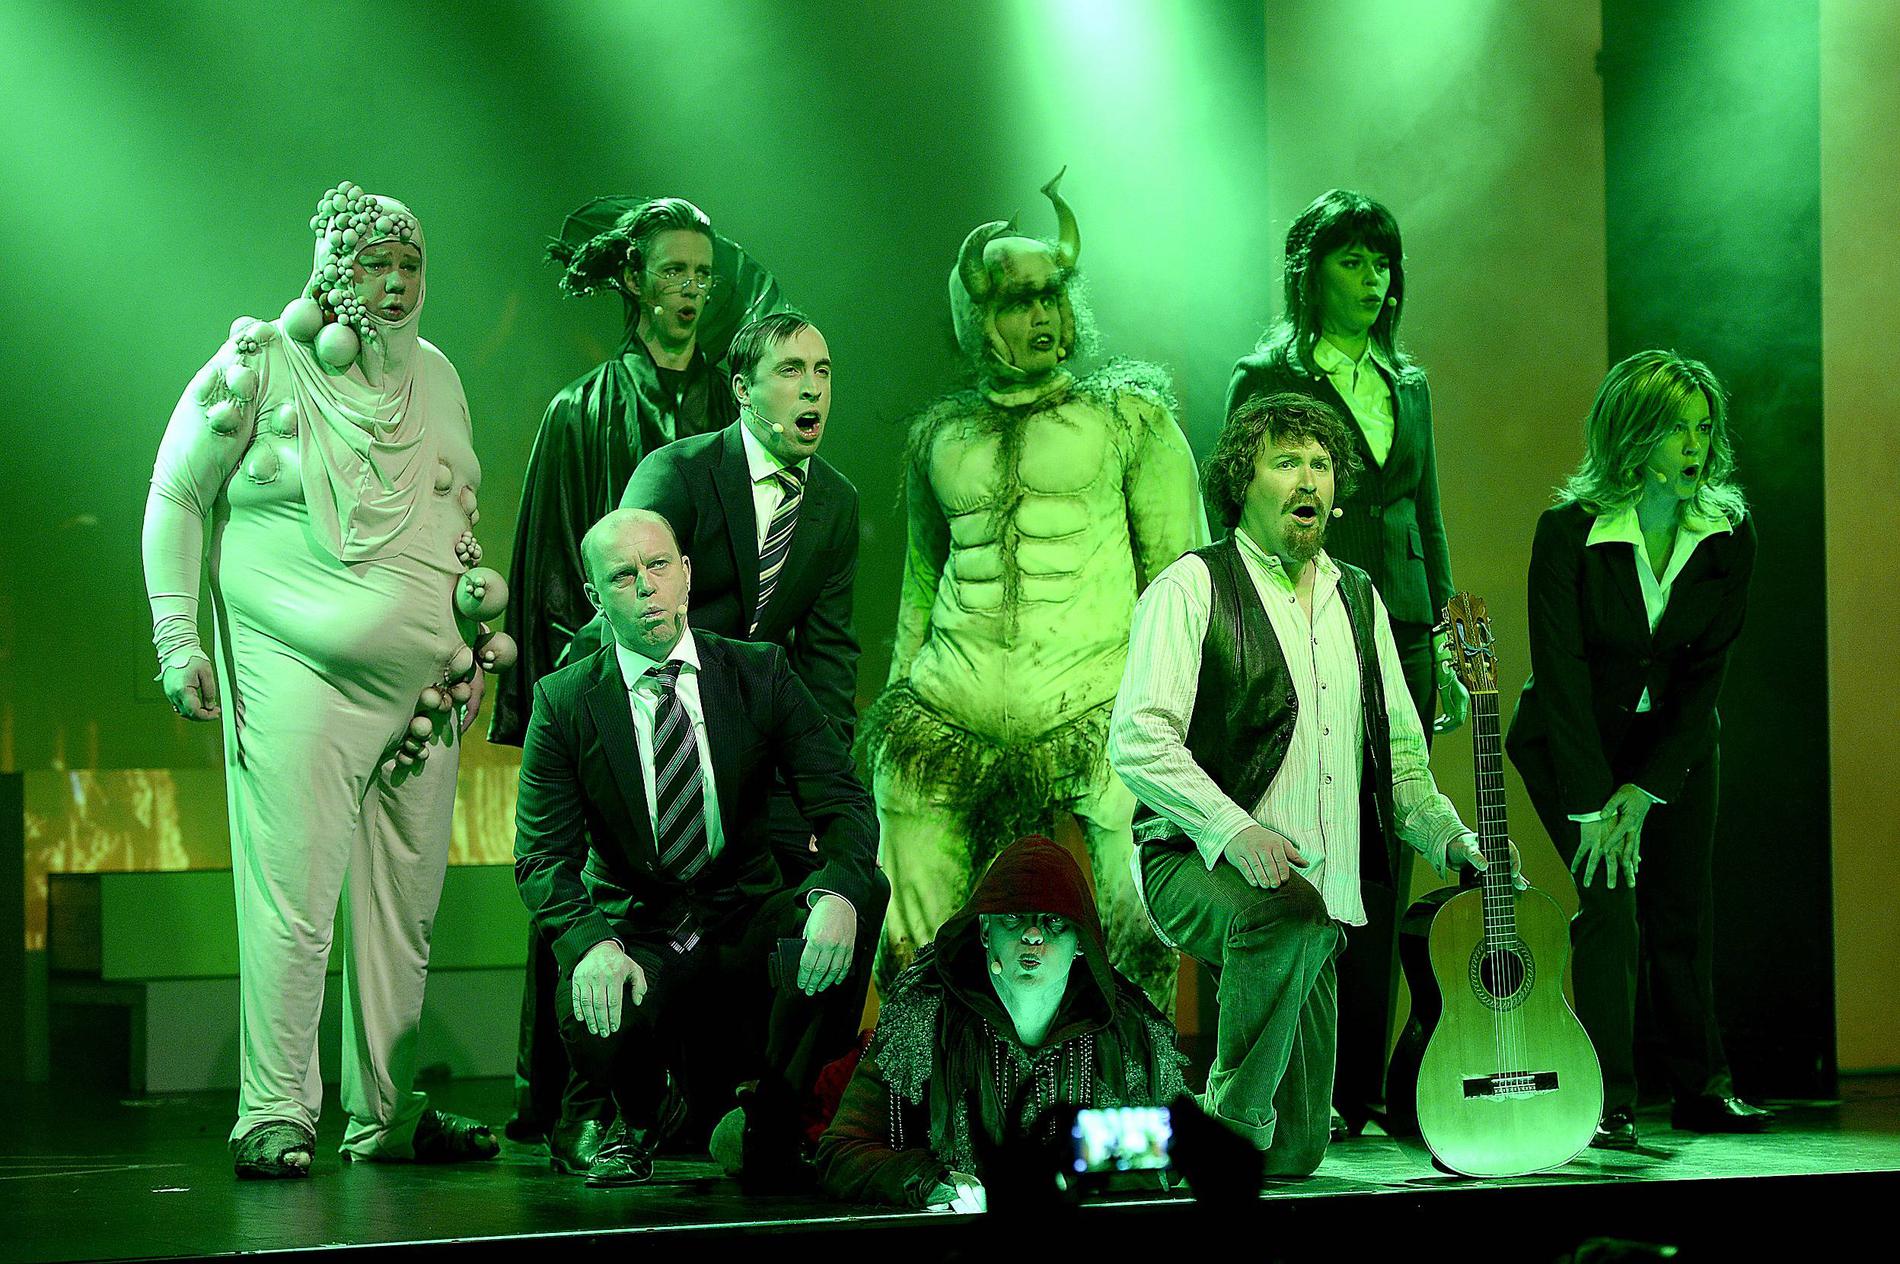 Humorgruppen Grotescos show ”Grotesco på Scala - en näradödenupplevelse”.